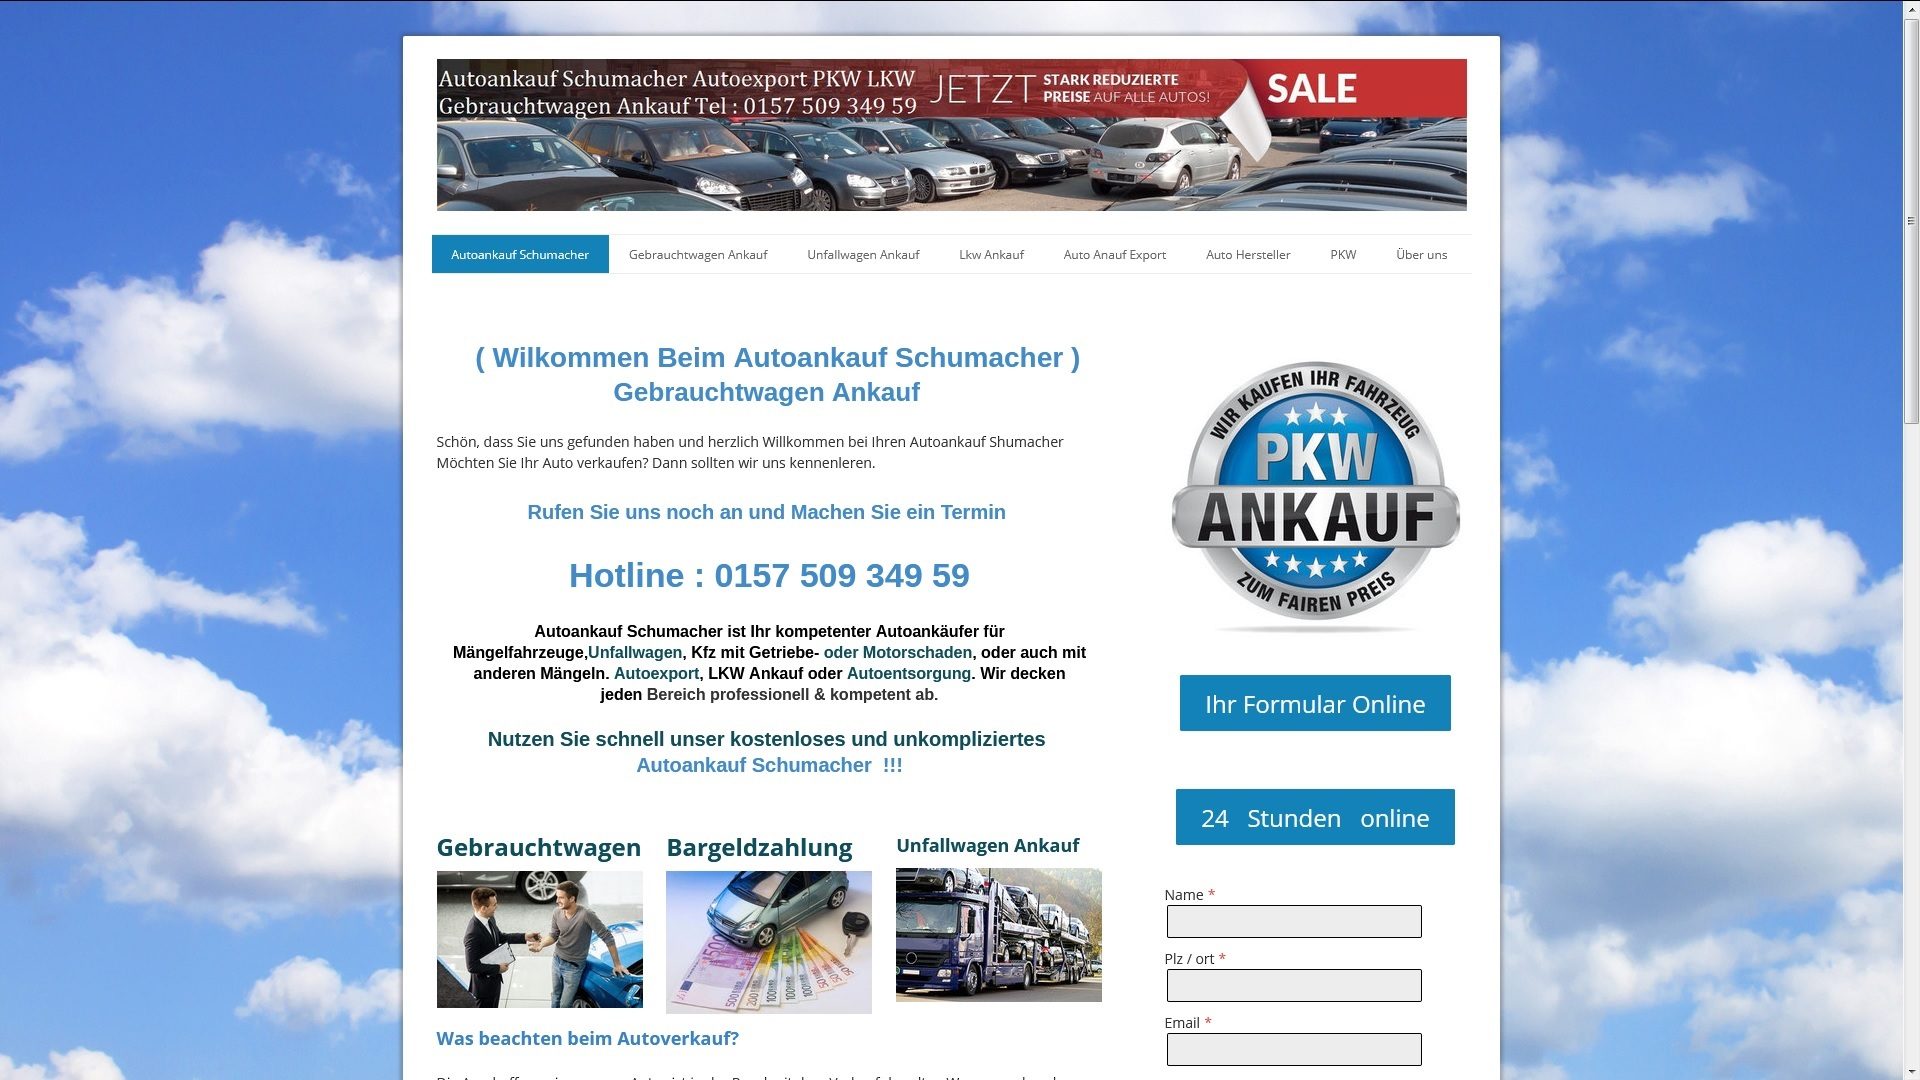 Autohändler Duisburg kauft Unfallfahrzeuge